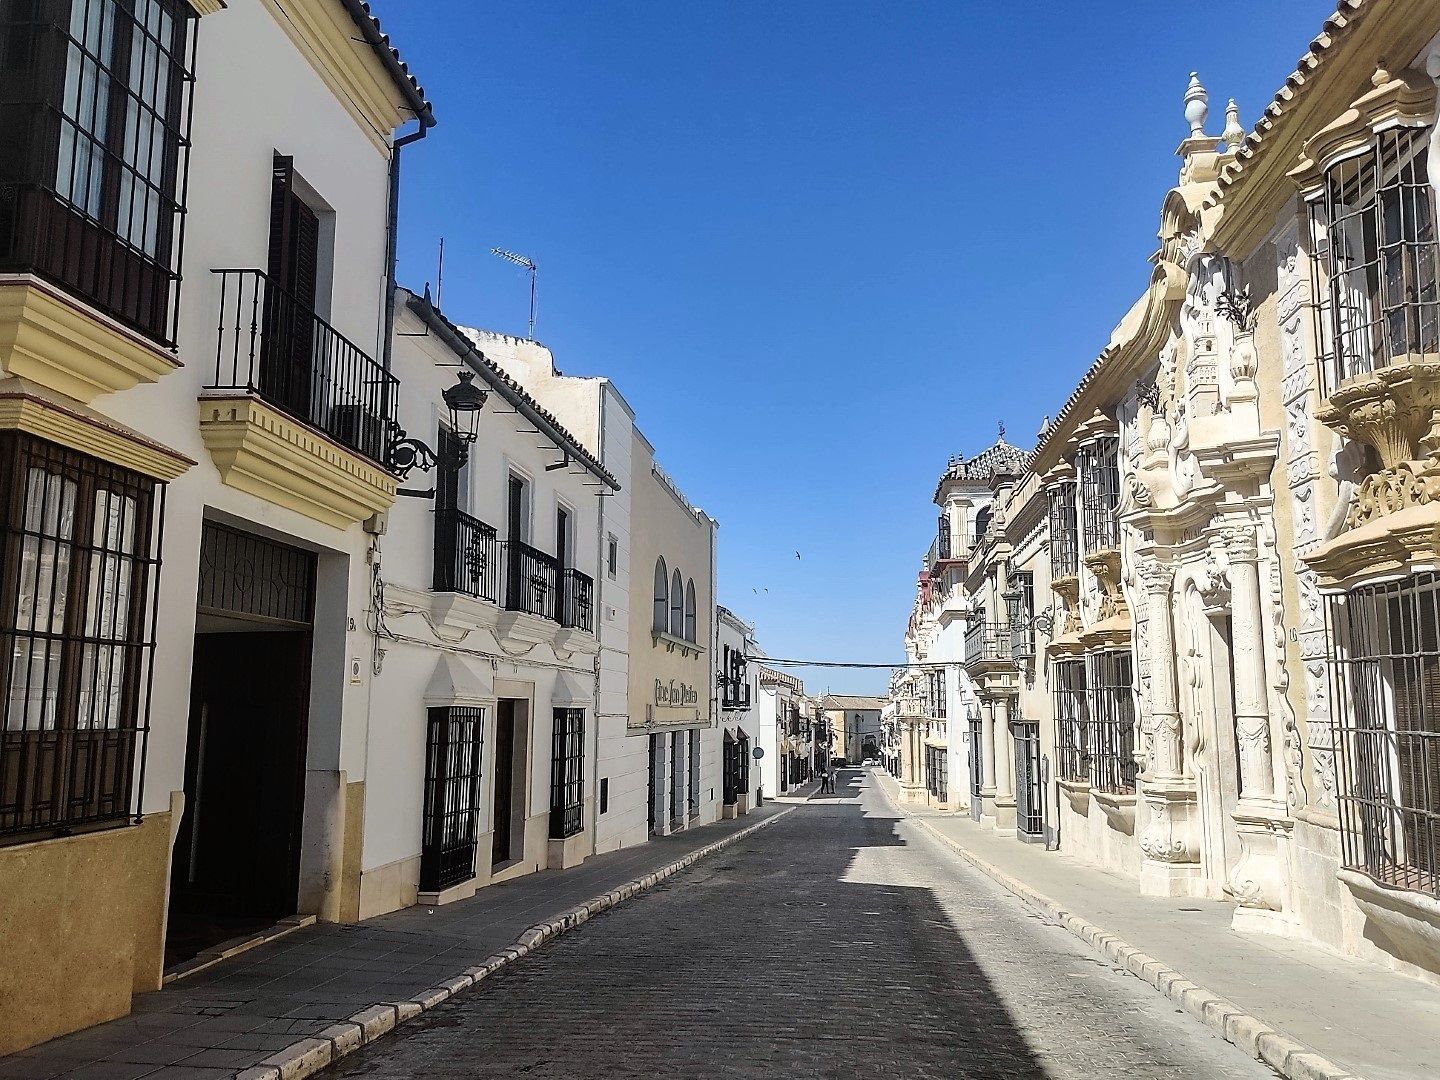 La calle más bonita de Europa está en España, según la UNESCO. Calle San Pedro, Osuna. (Europa Press)